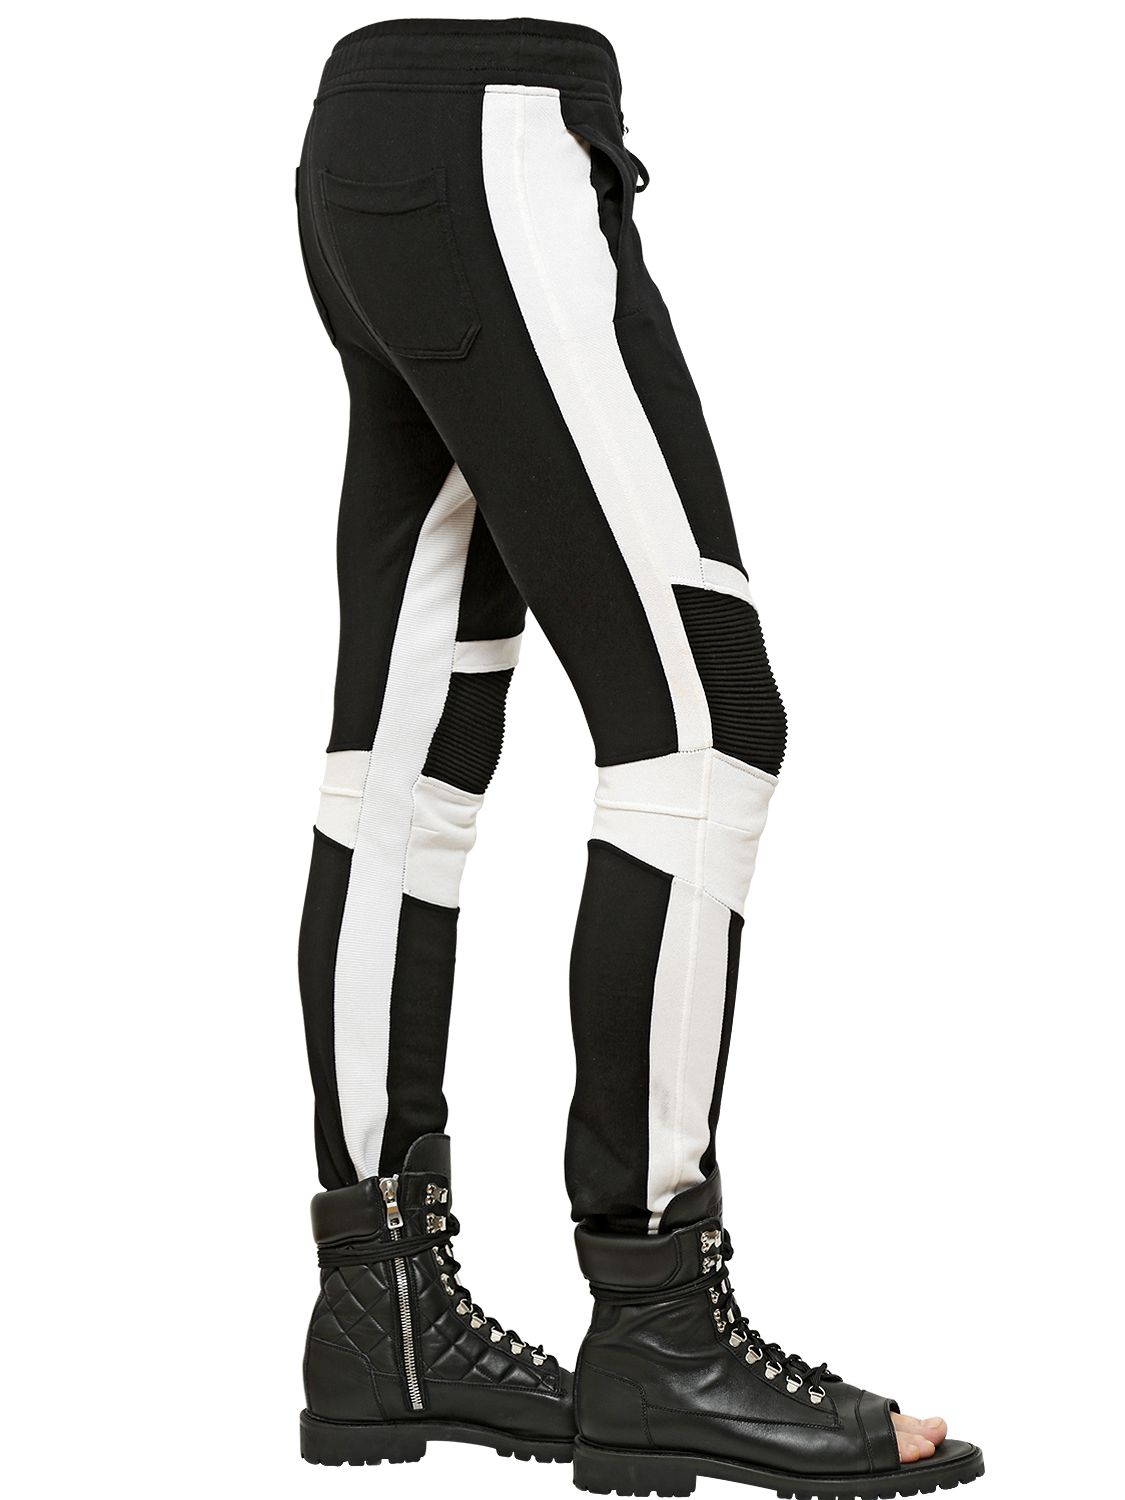 Balmain Biker Style Cotton Jogging Pants in Black/White (Black) for Men -  Lyst